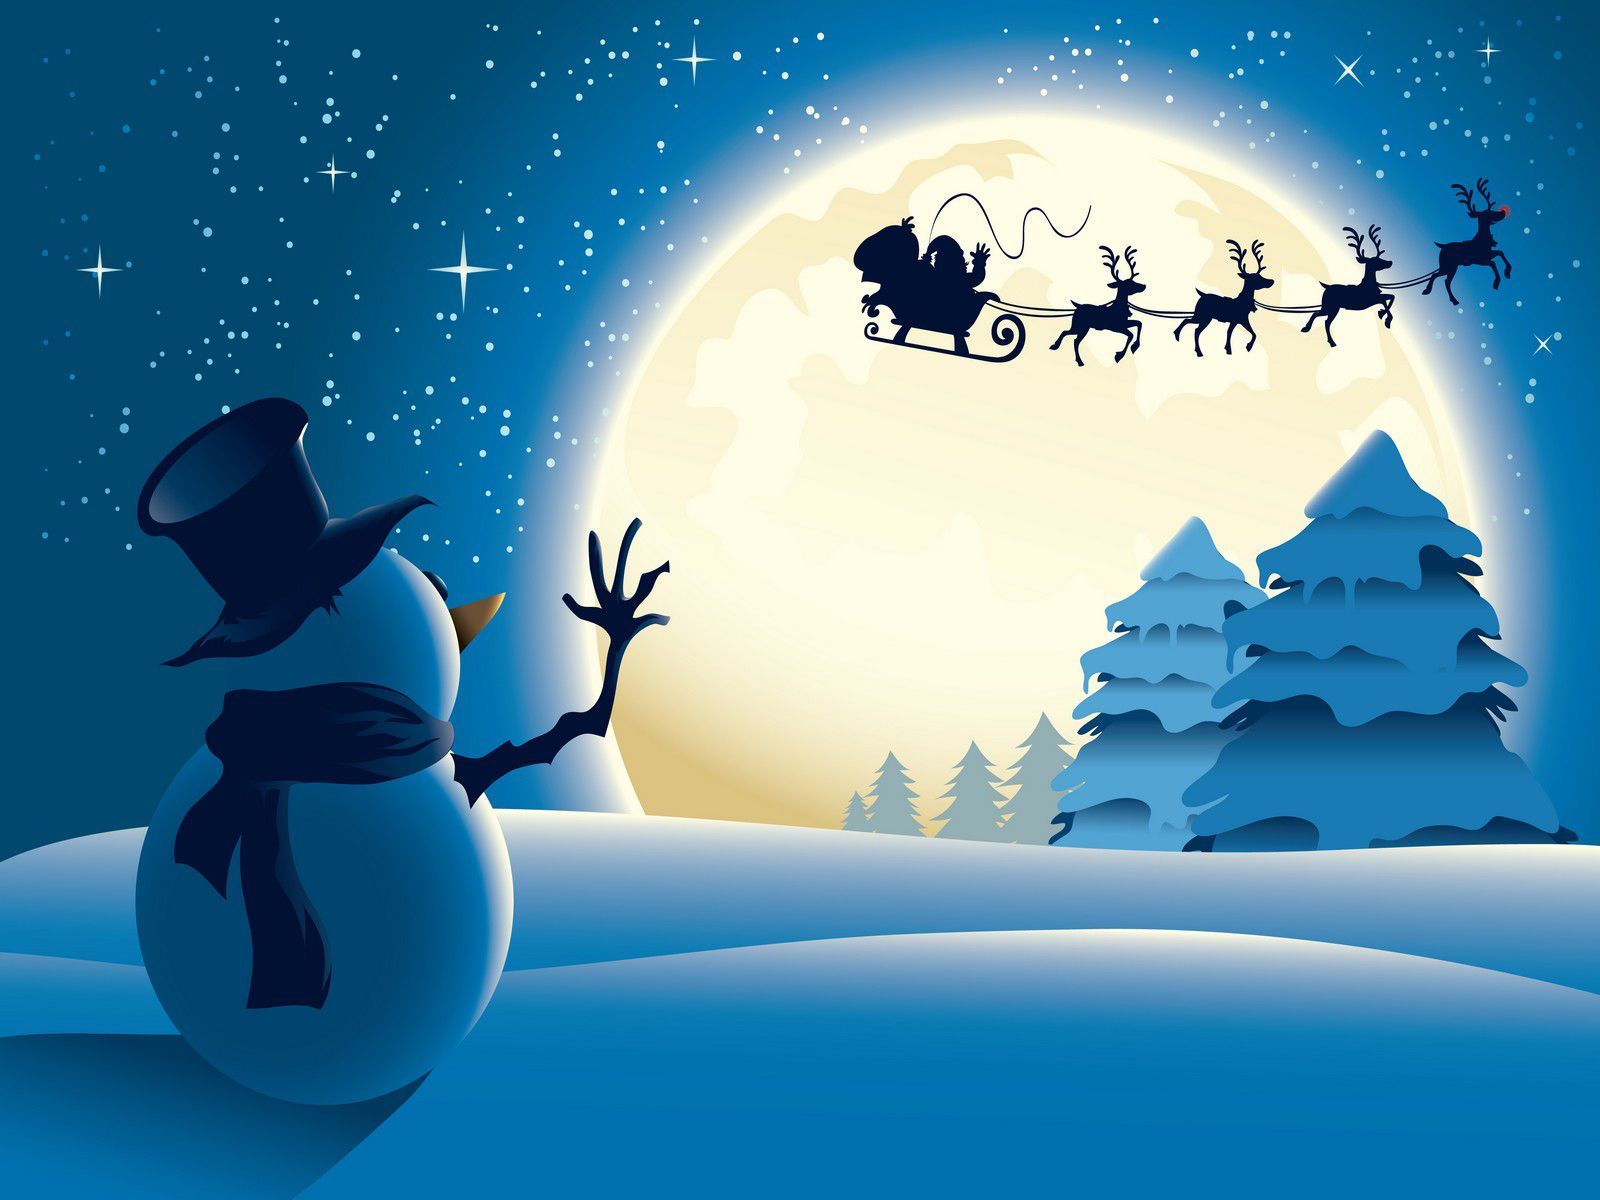 Winter Christmas Wallpaper Desktop Background. Christmas wallpaper hd, Christmas wallpaper, Snowman wallpaper